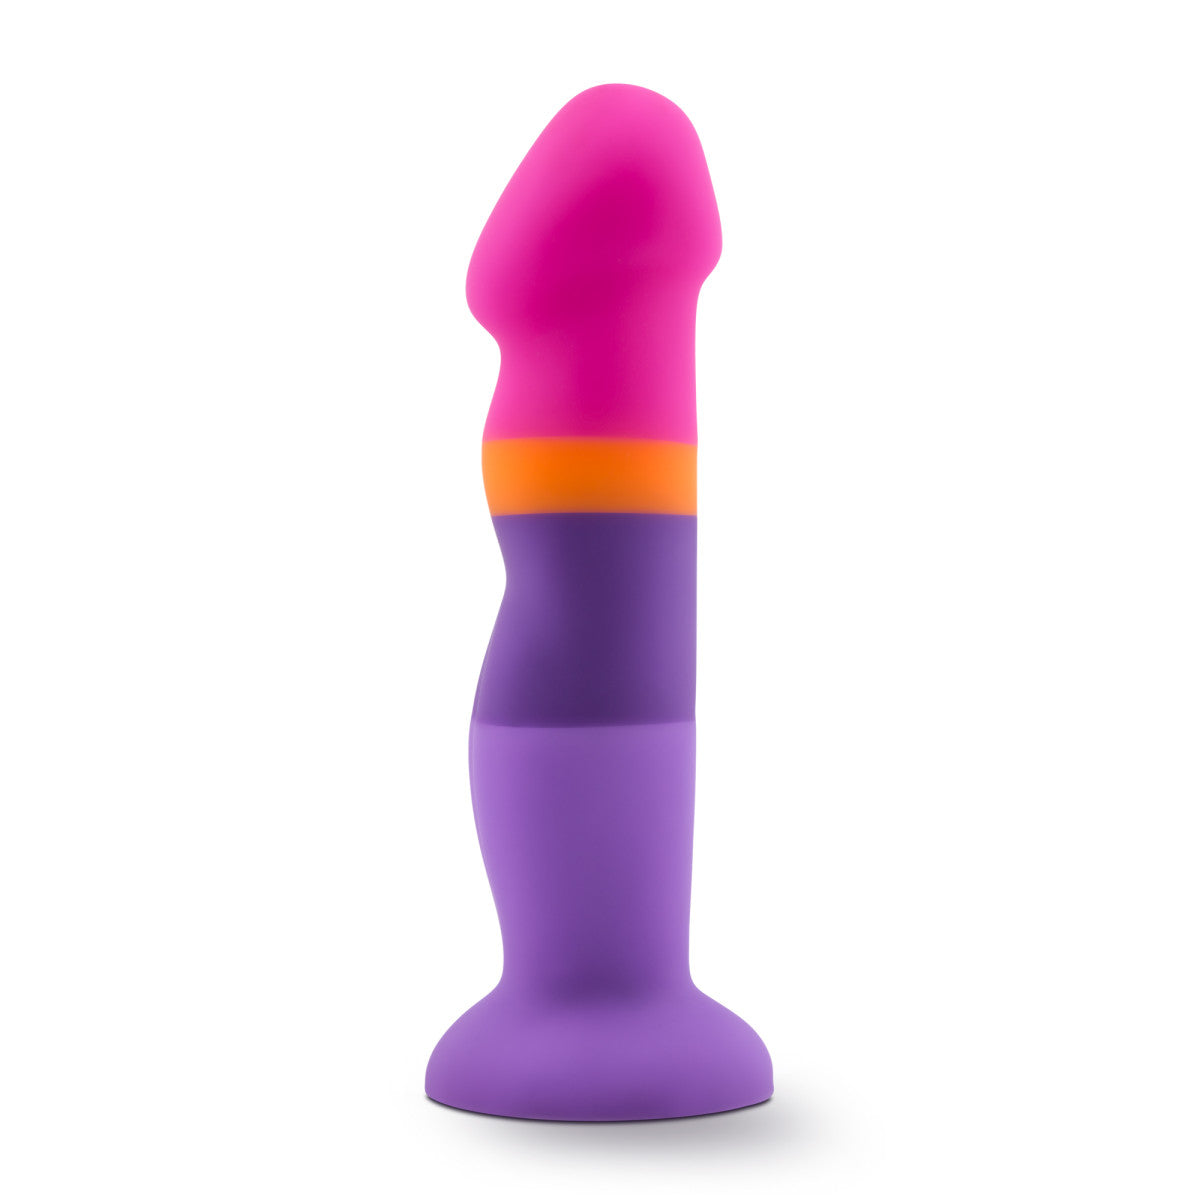 Avant D3 Suction cup base Summer Fling Non-representational dildo with pink, orange, purple